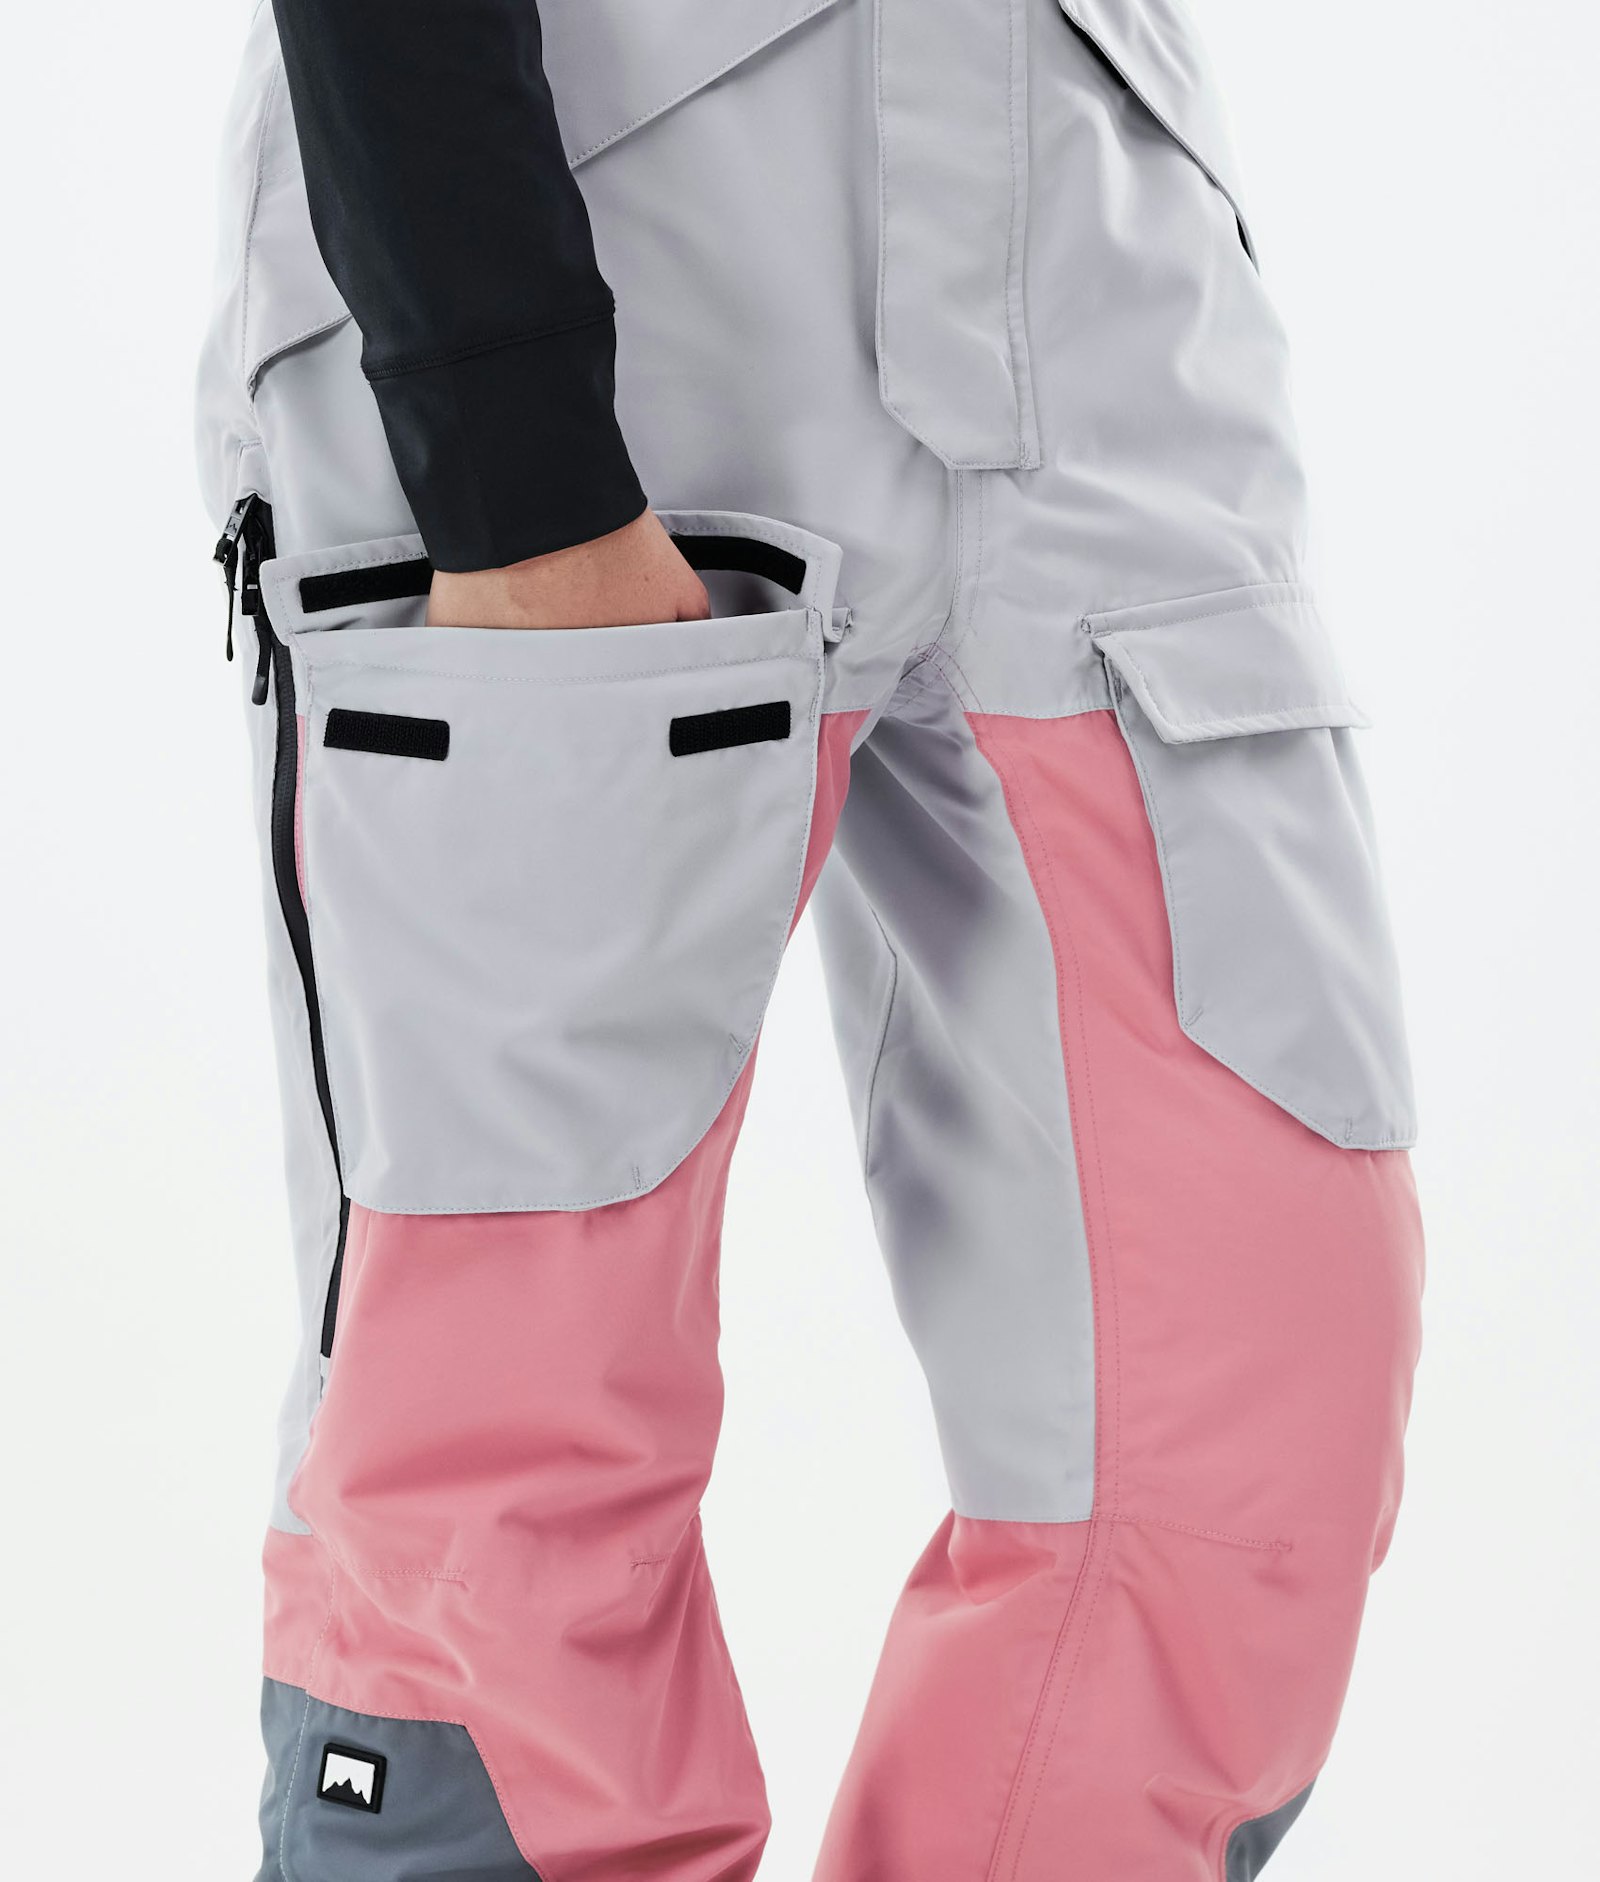 Montec Fawk W 2021 Skihose Damen Light Grey/Pink/Light Pearl